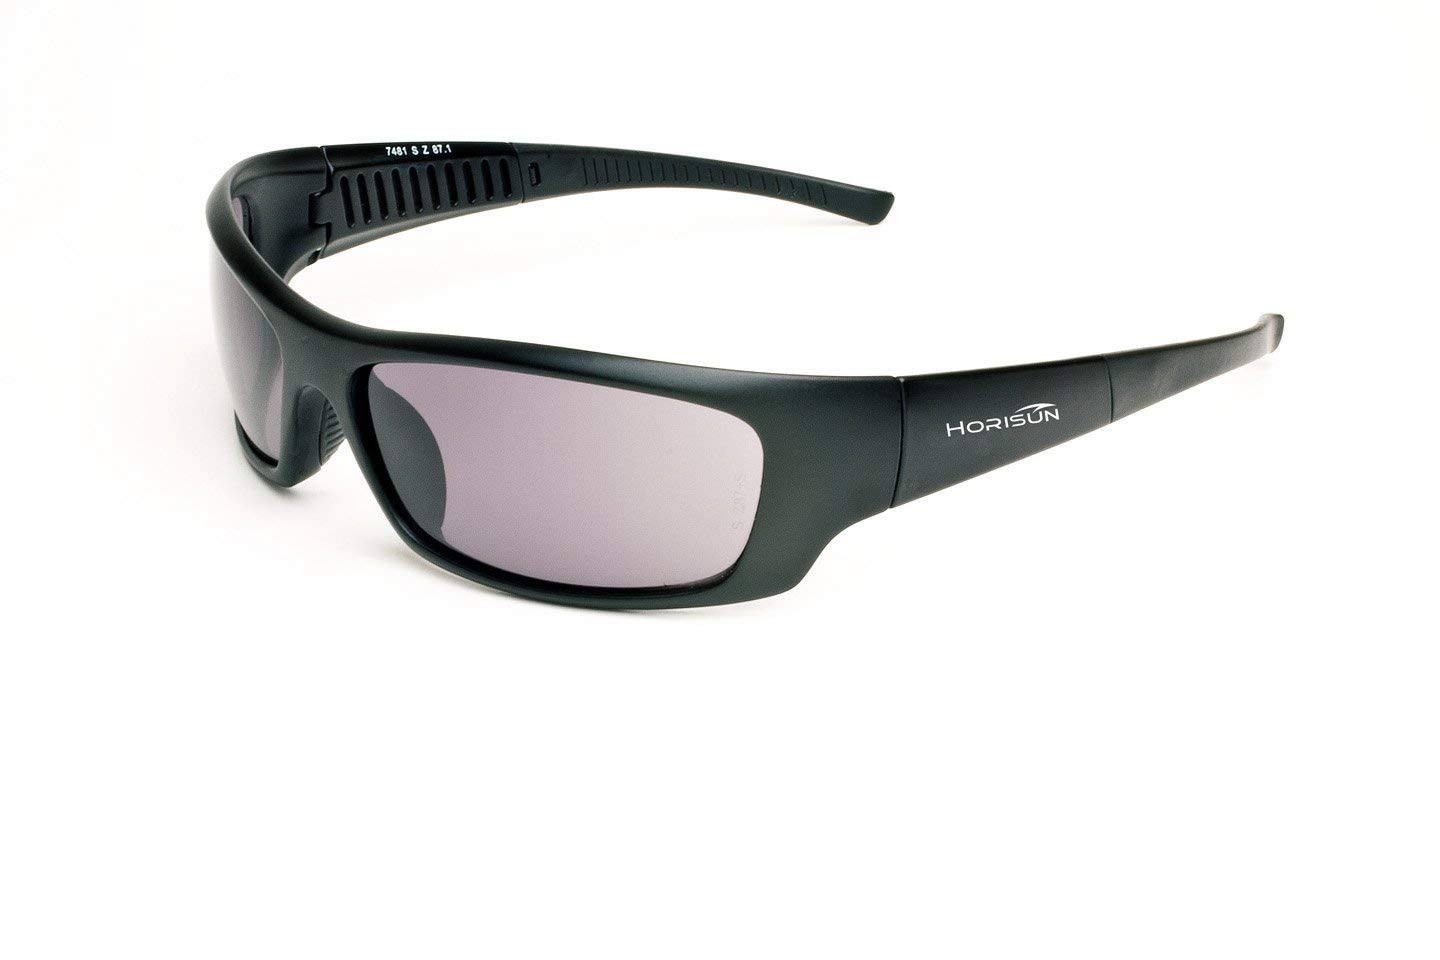 Z87Horisun 7481 Safety Glasses, Satin Black Frame/Smoke Lens | General